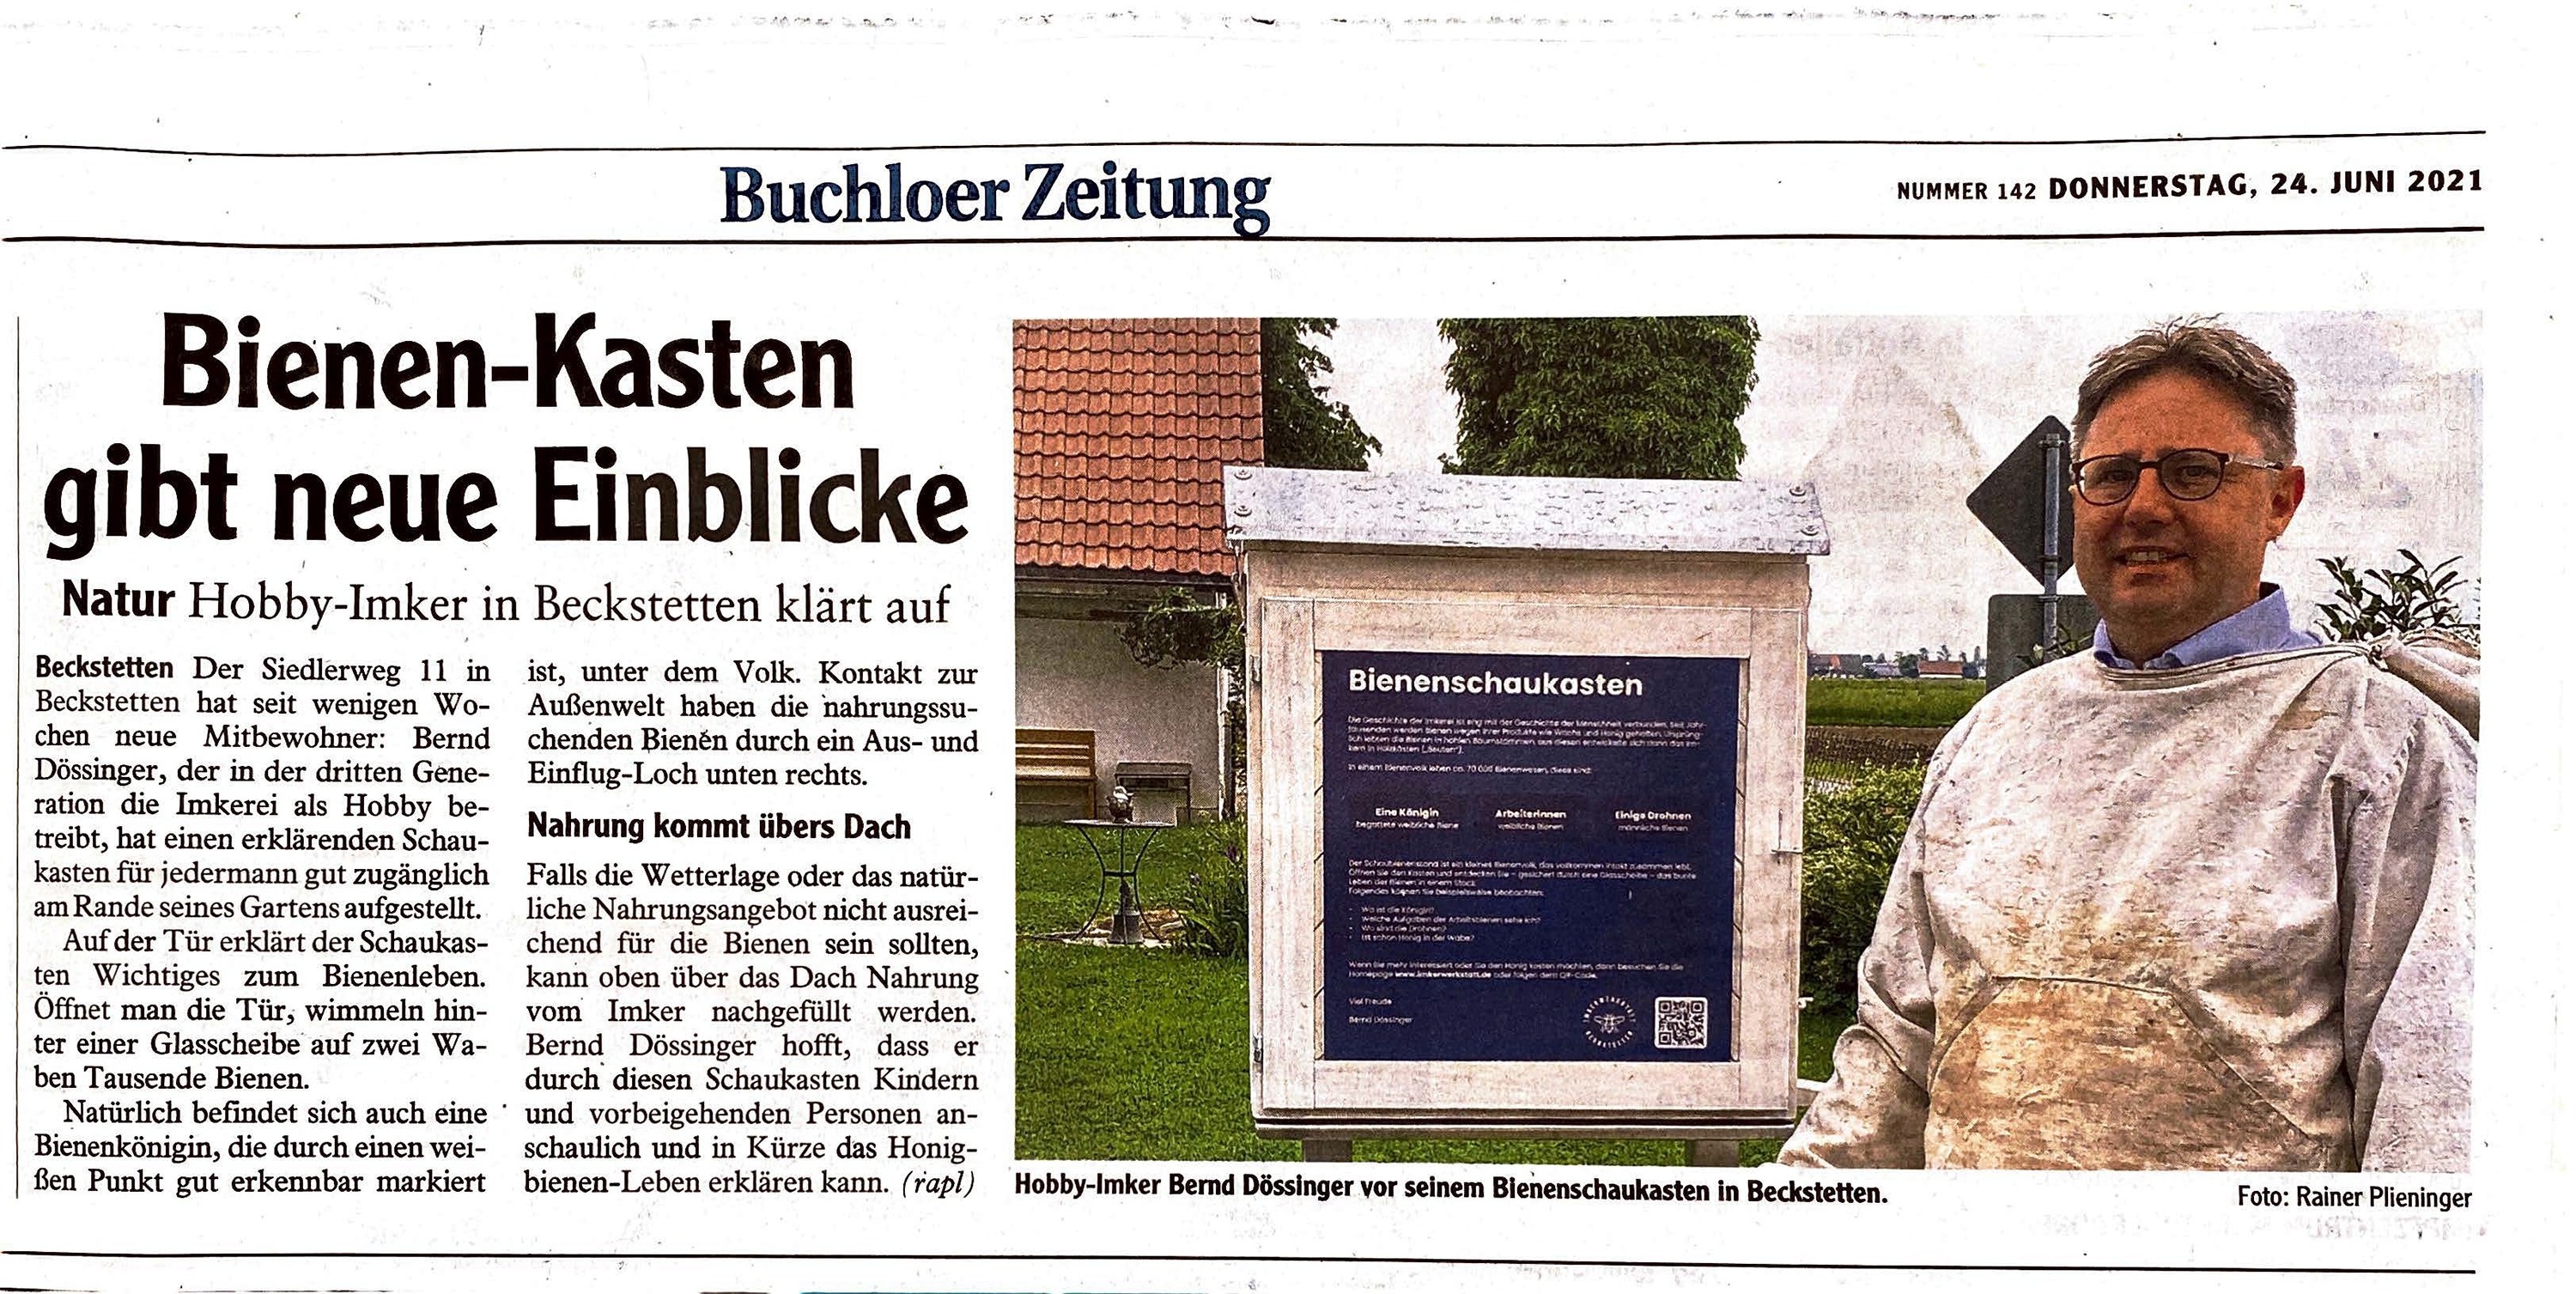 Buchloer Zeitung